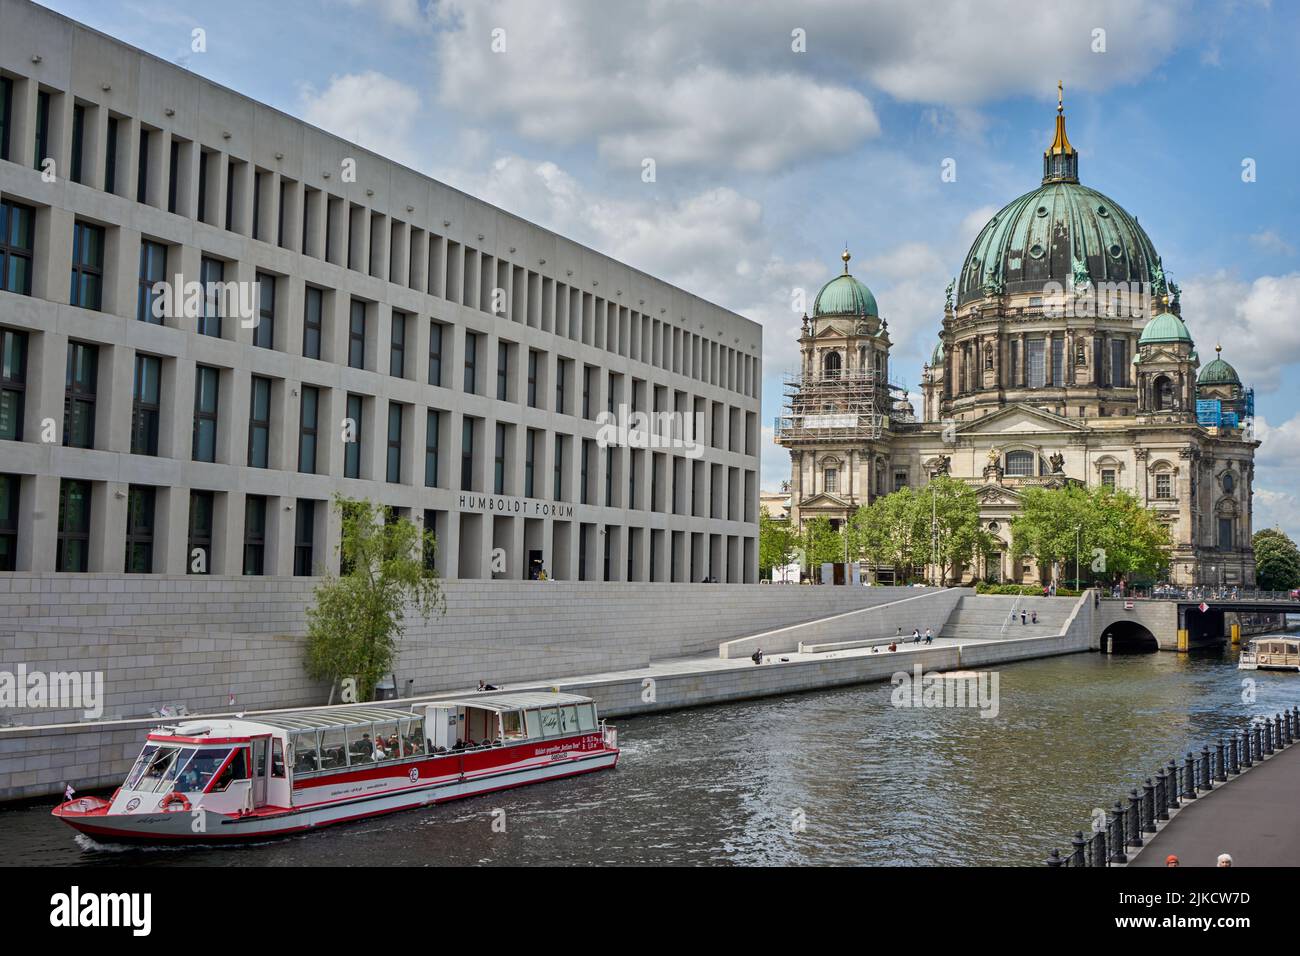 Humboldt-Forum, Berliner Schloss, Ostfassade, vorne die Humboldt-Promenade an der Spree mit Ausflugsboot, hinten der Berliner Dom, Berlin Stock Photo